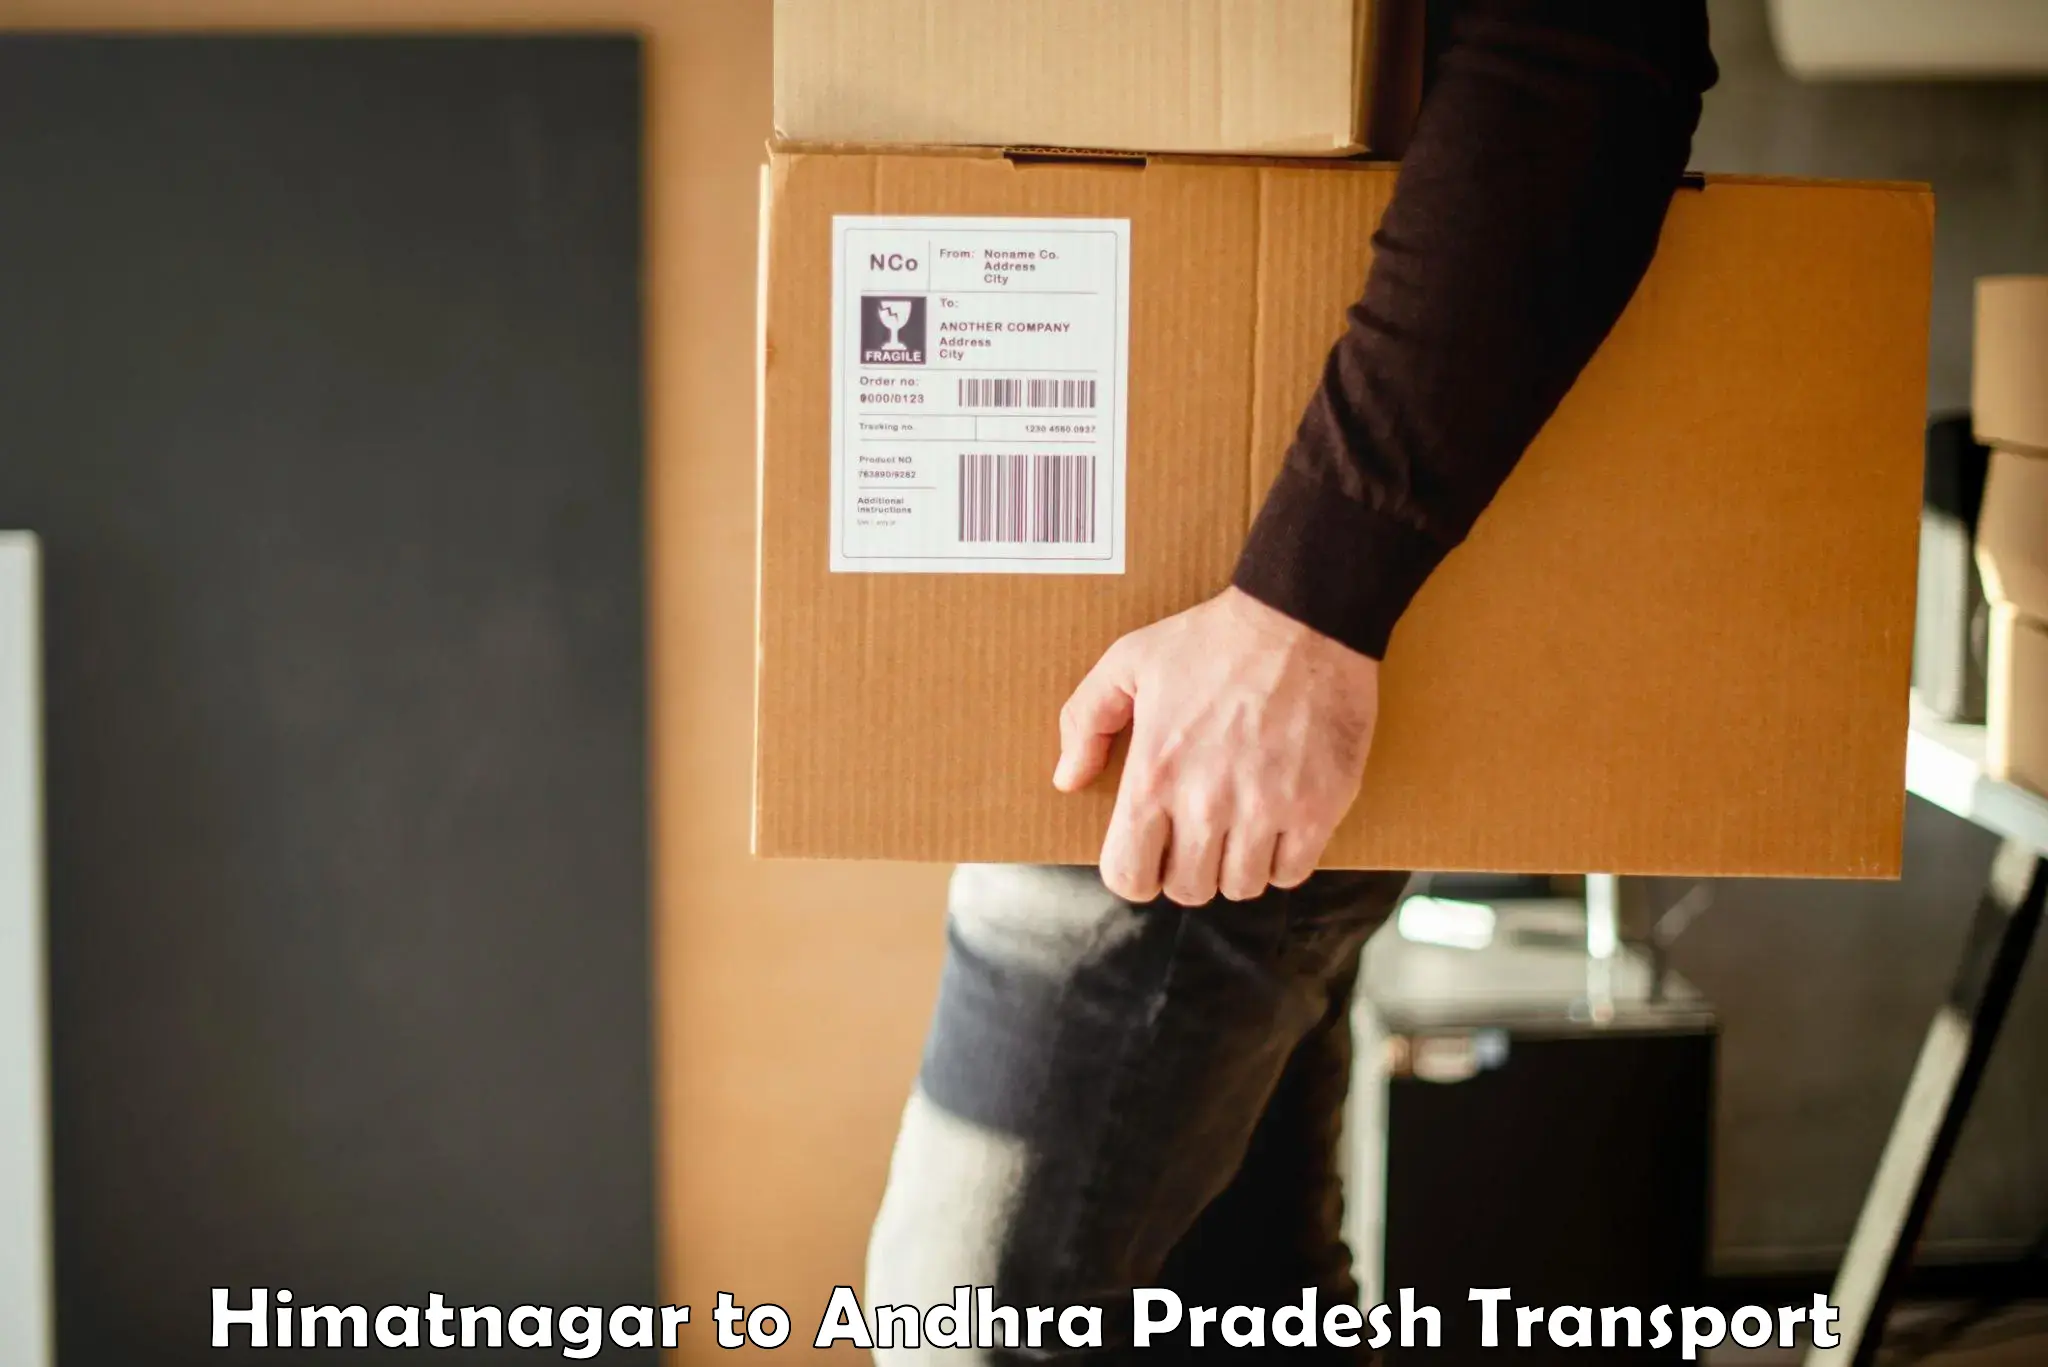 Nearest transport service Himatnagar to Gopalapuram